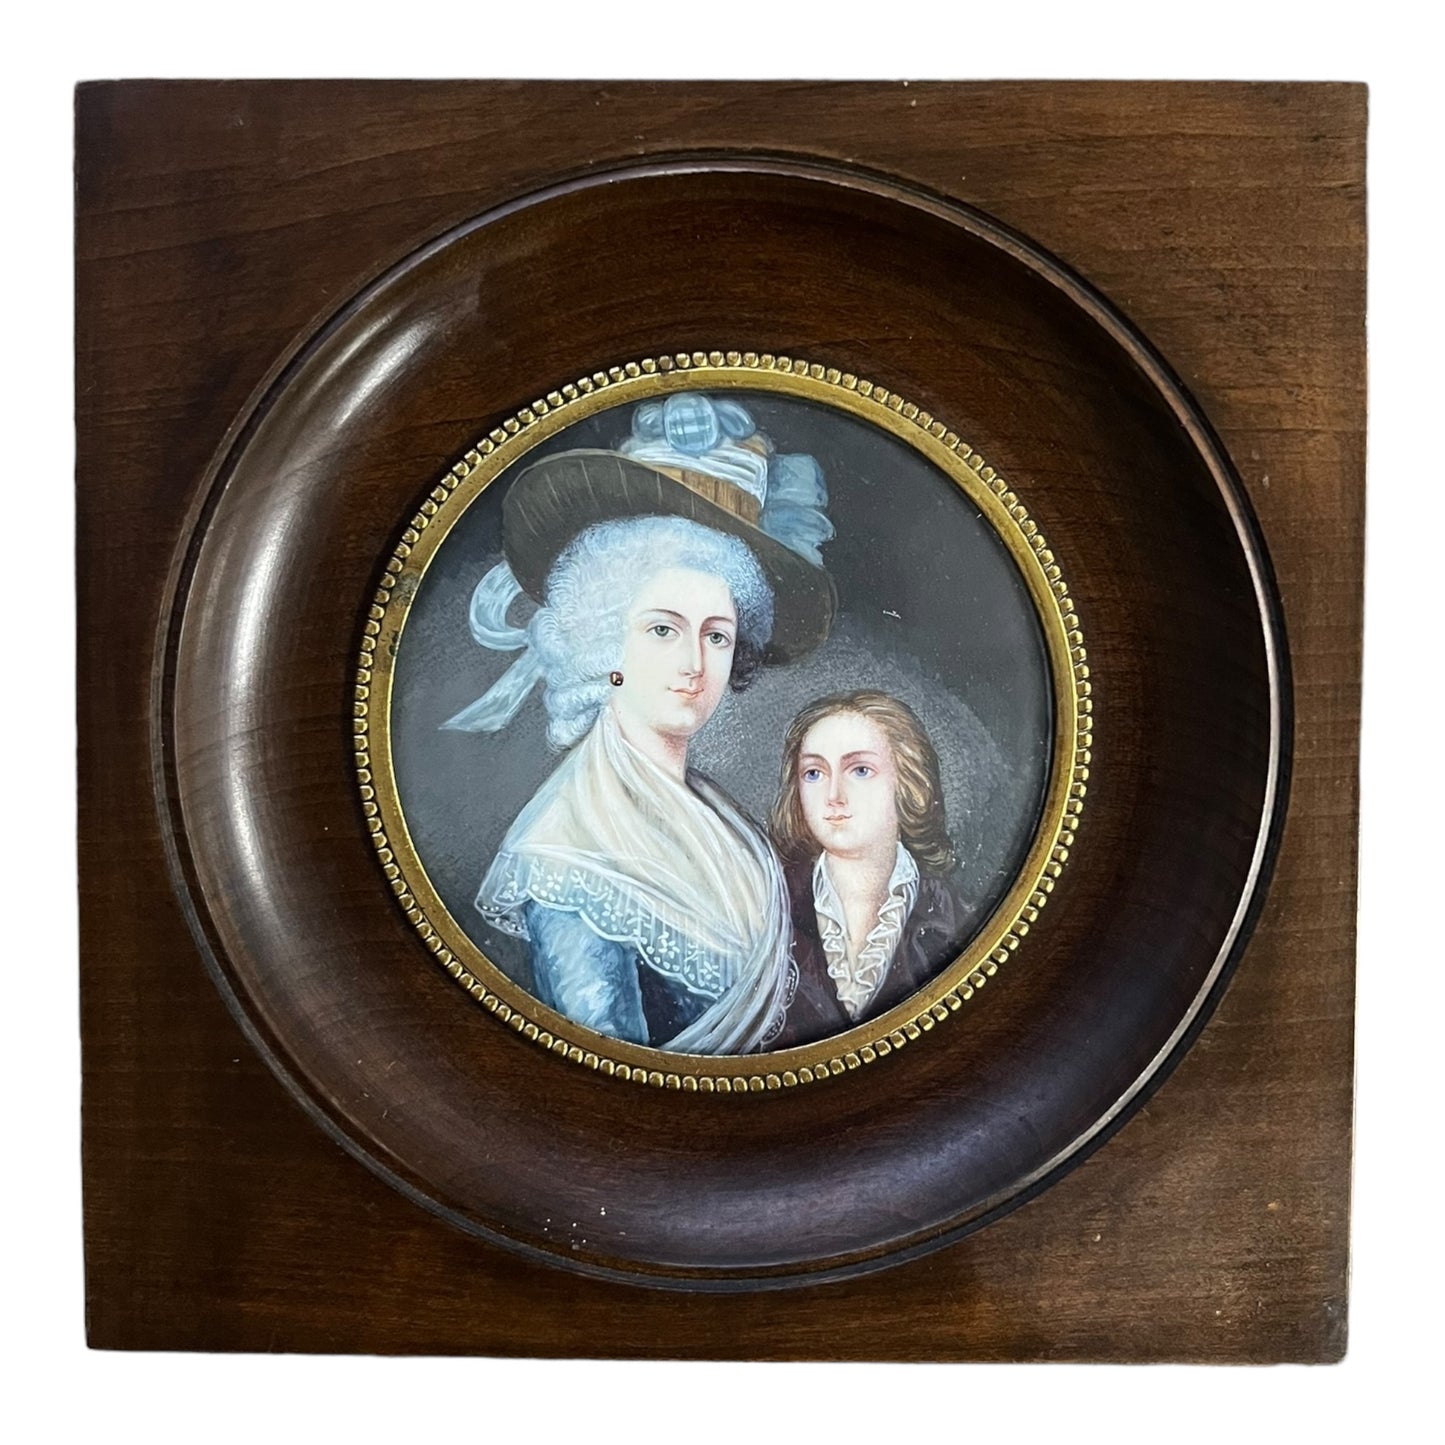 Marie Antoinette and Louis XVII Miniature portrait on ivory